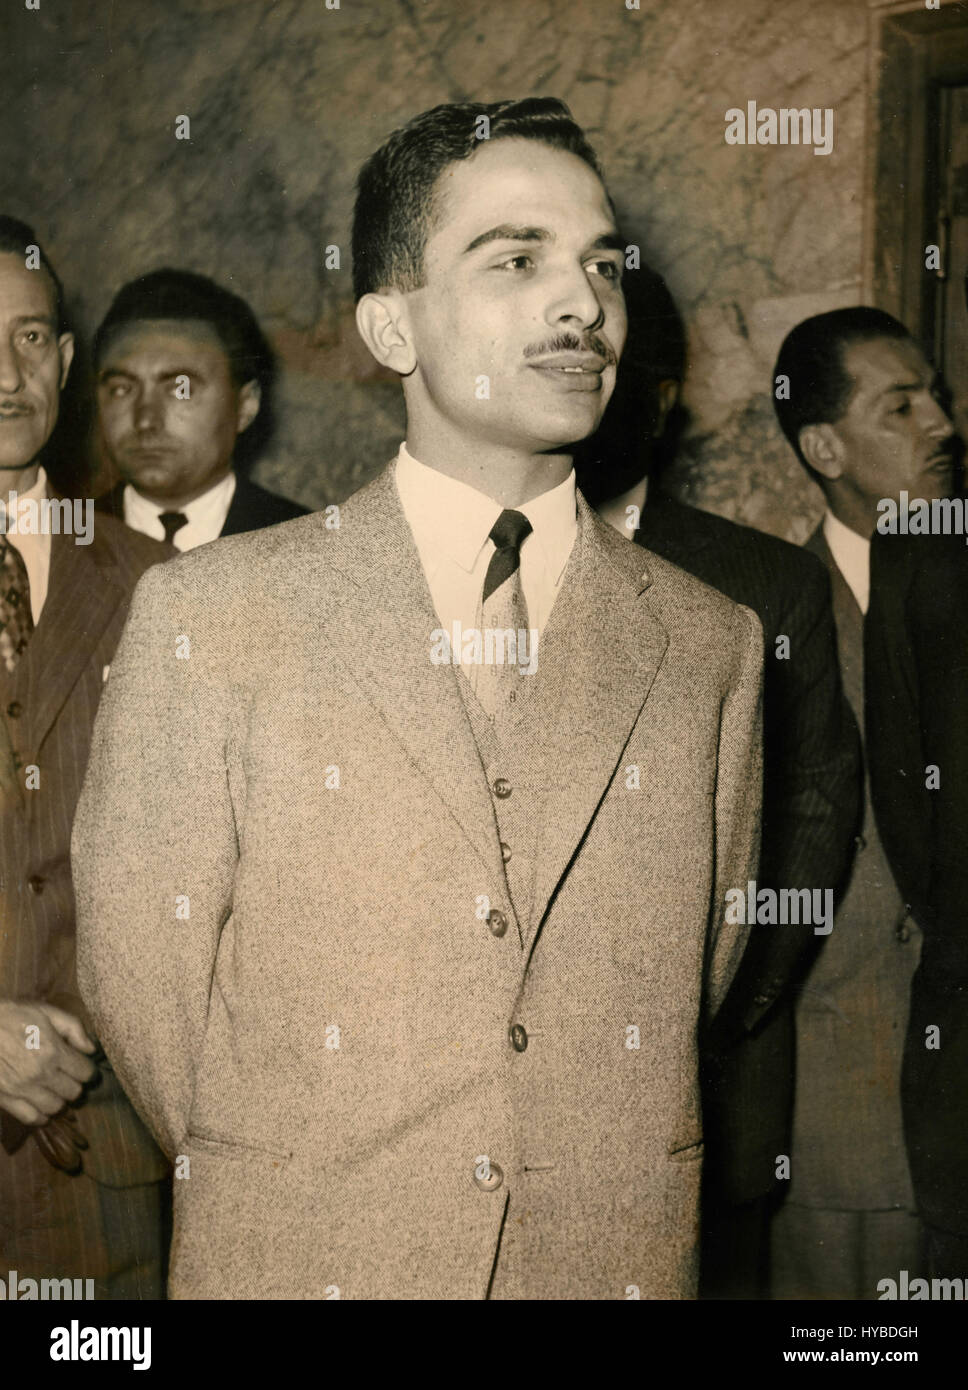 The King of Jordan Hussein Stock Photo